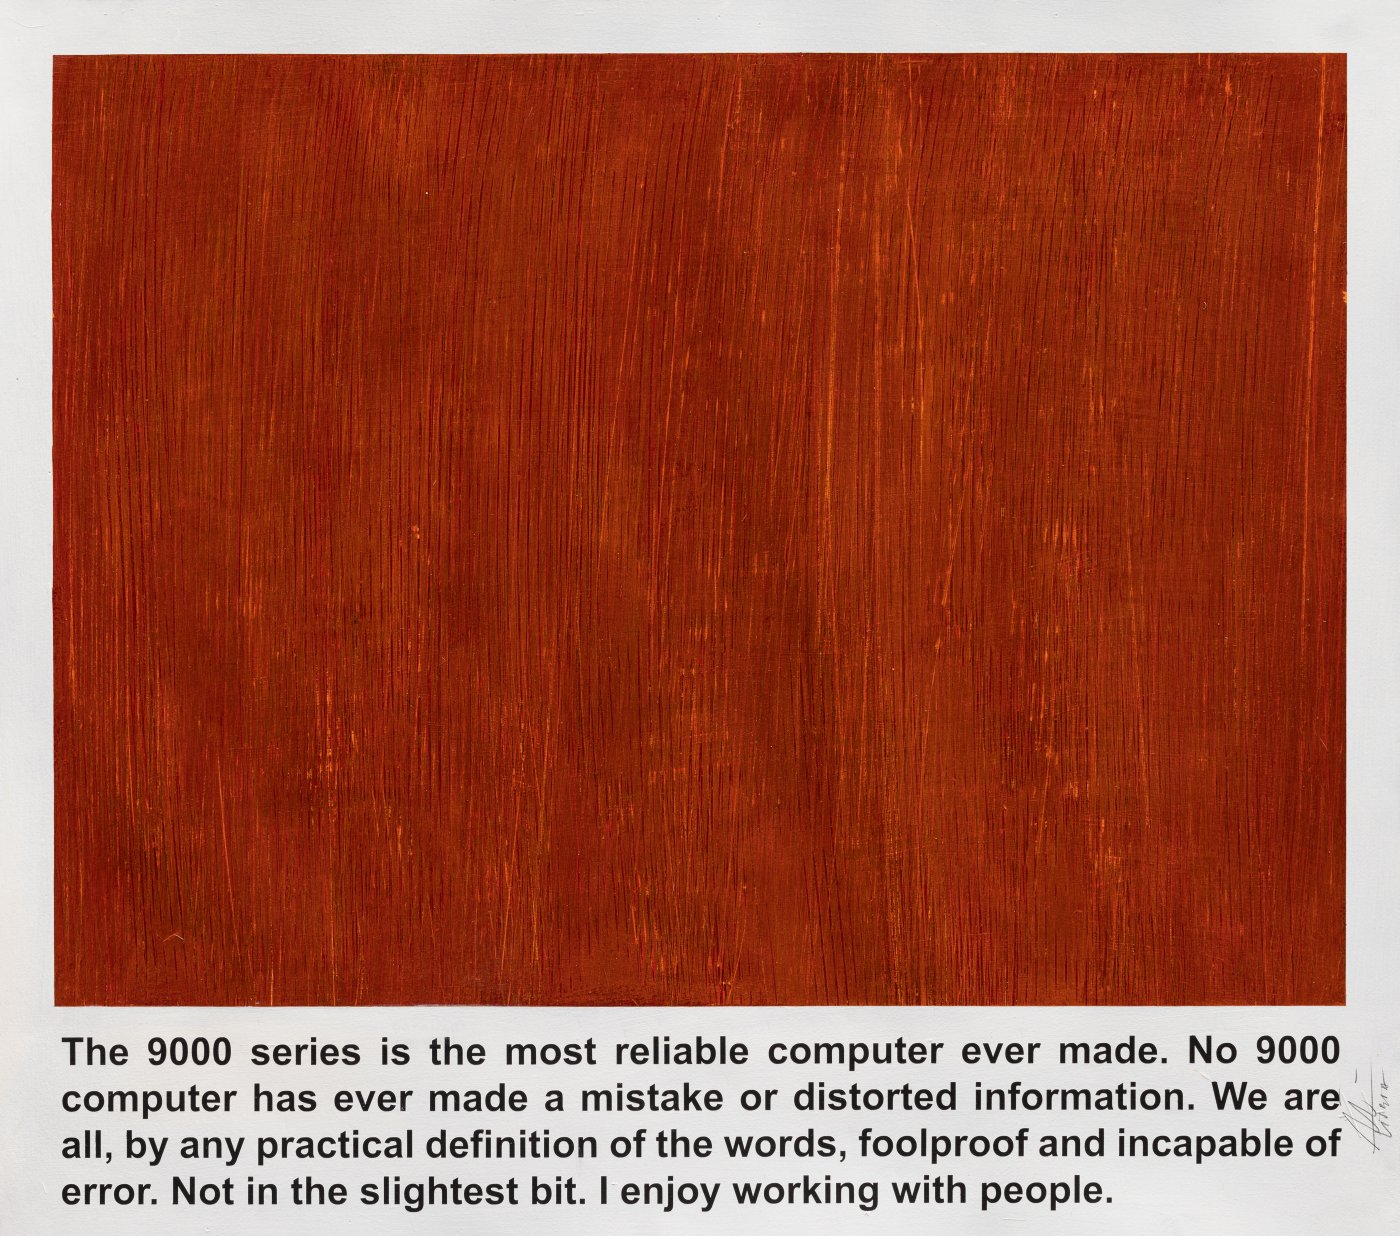 João Louro, Blind Image #233 (The Entire HAL 9000 Dialogues #01), 2023. Acrylic on Arches 400g paper. 80,5 x 91,5 x 6 cm. Unique
